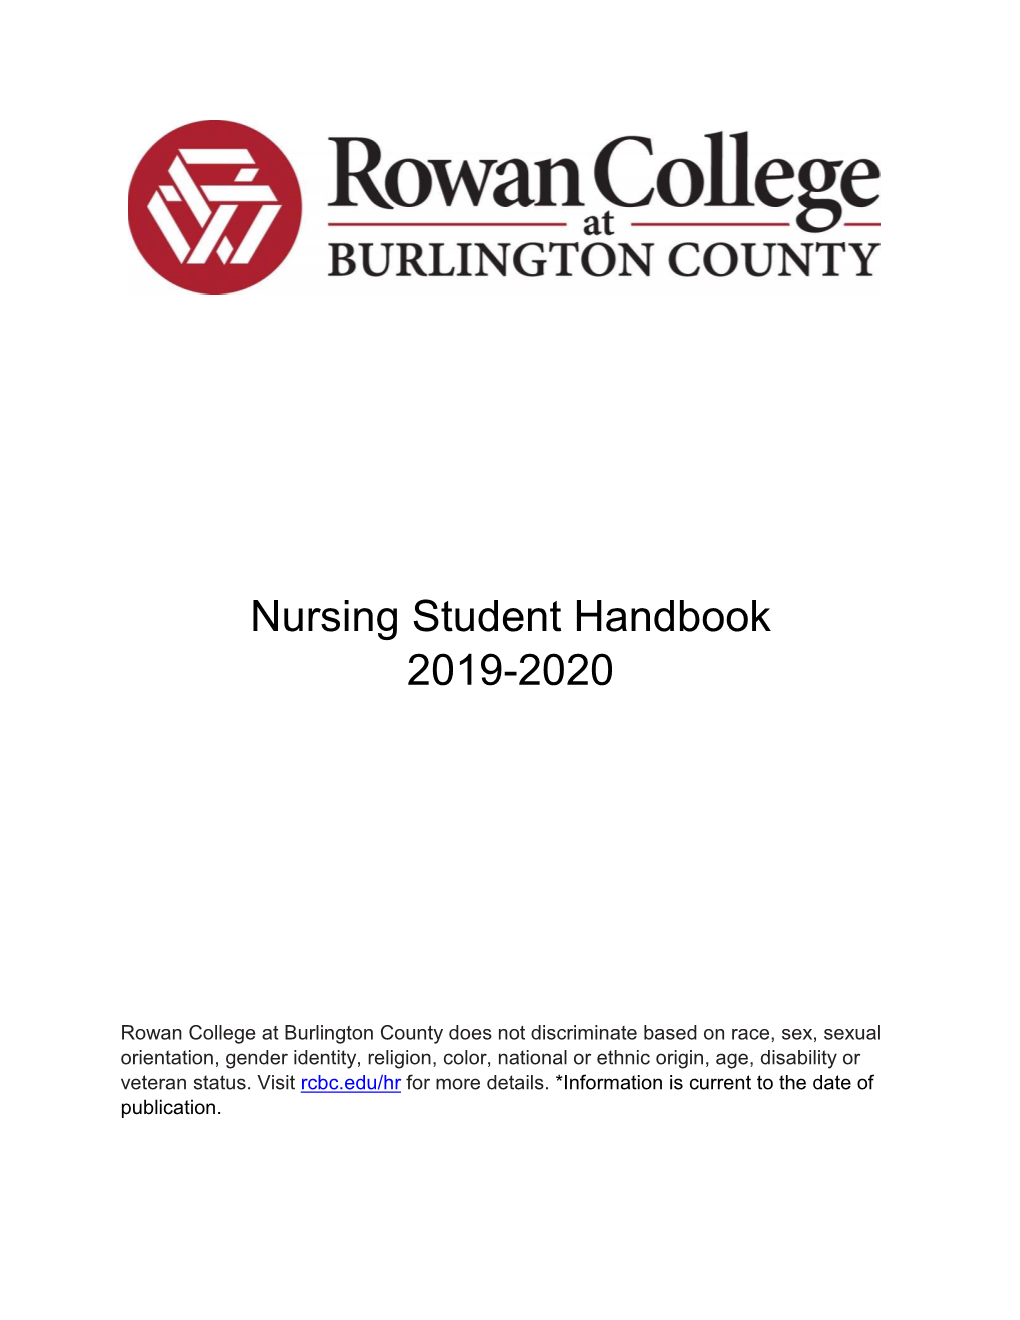 RCBC Nursing Student Handbook 2018-2019